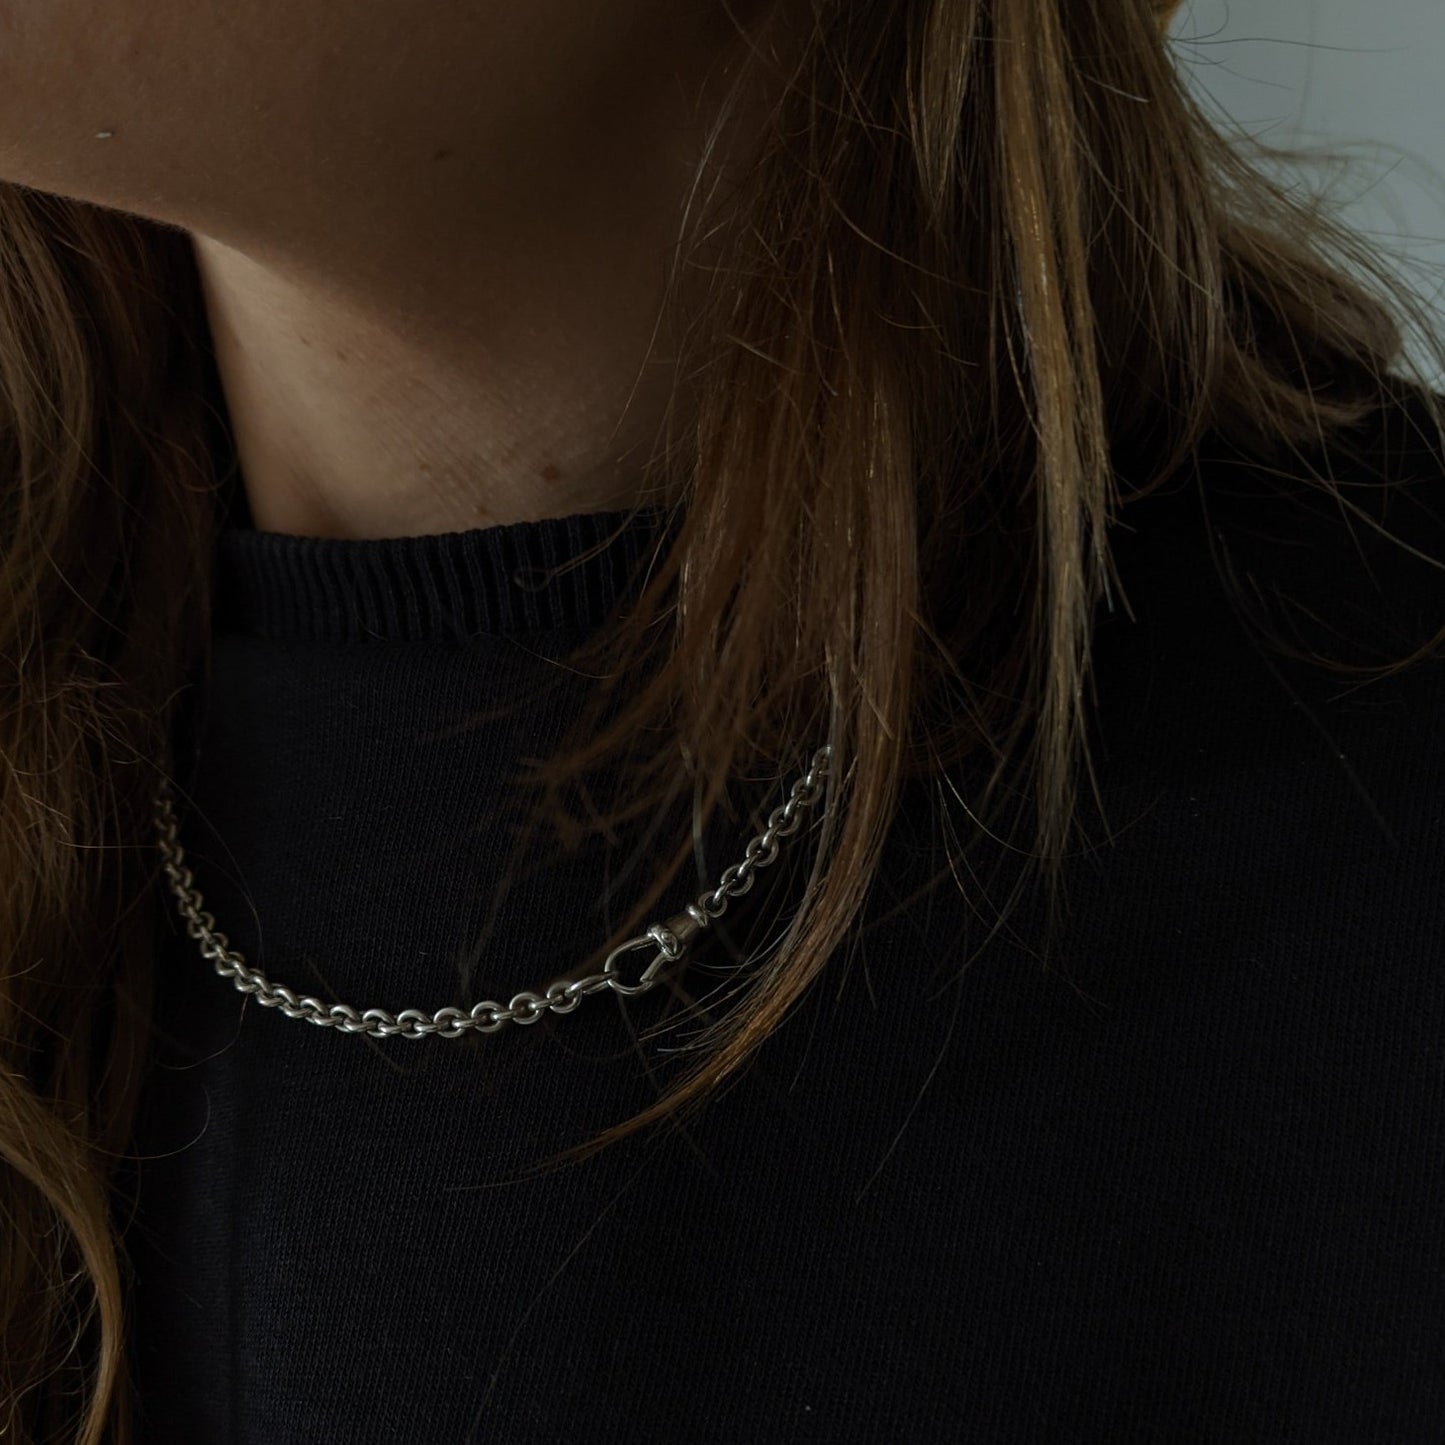 Albert Chain Necklace